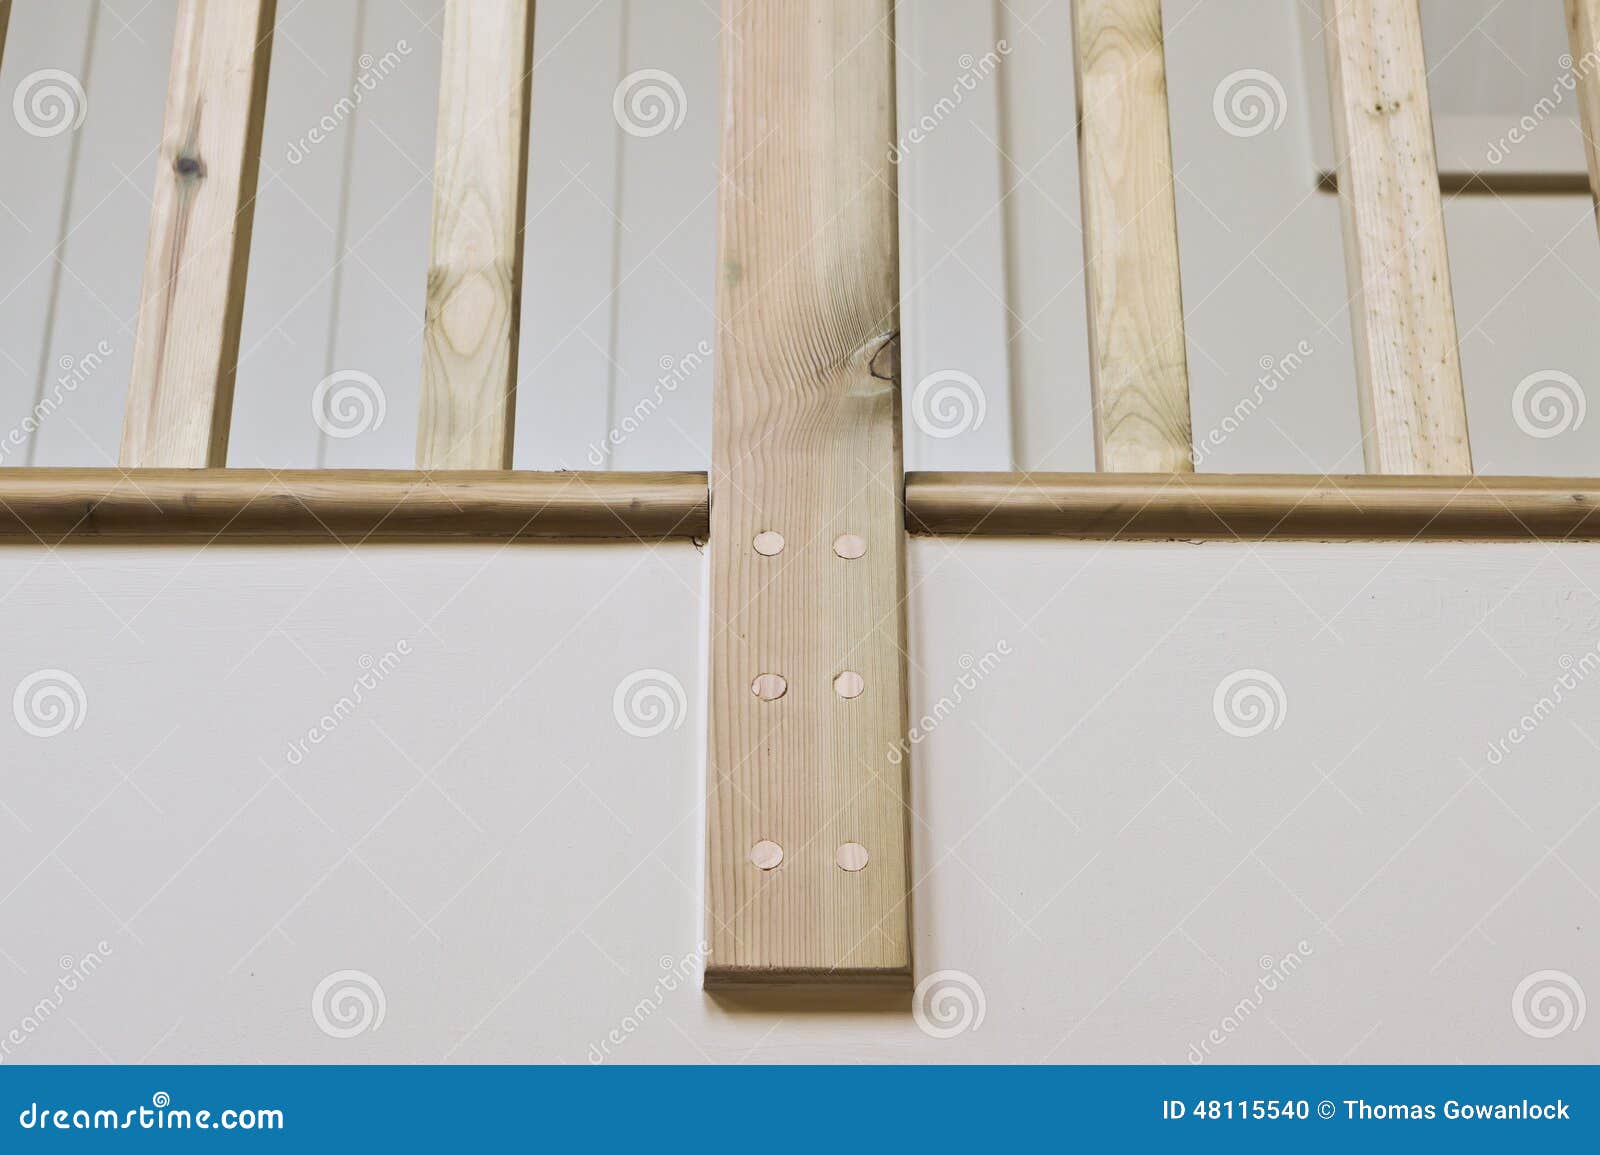 wooden bannister